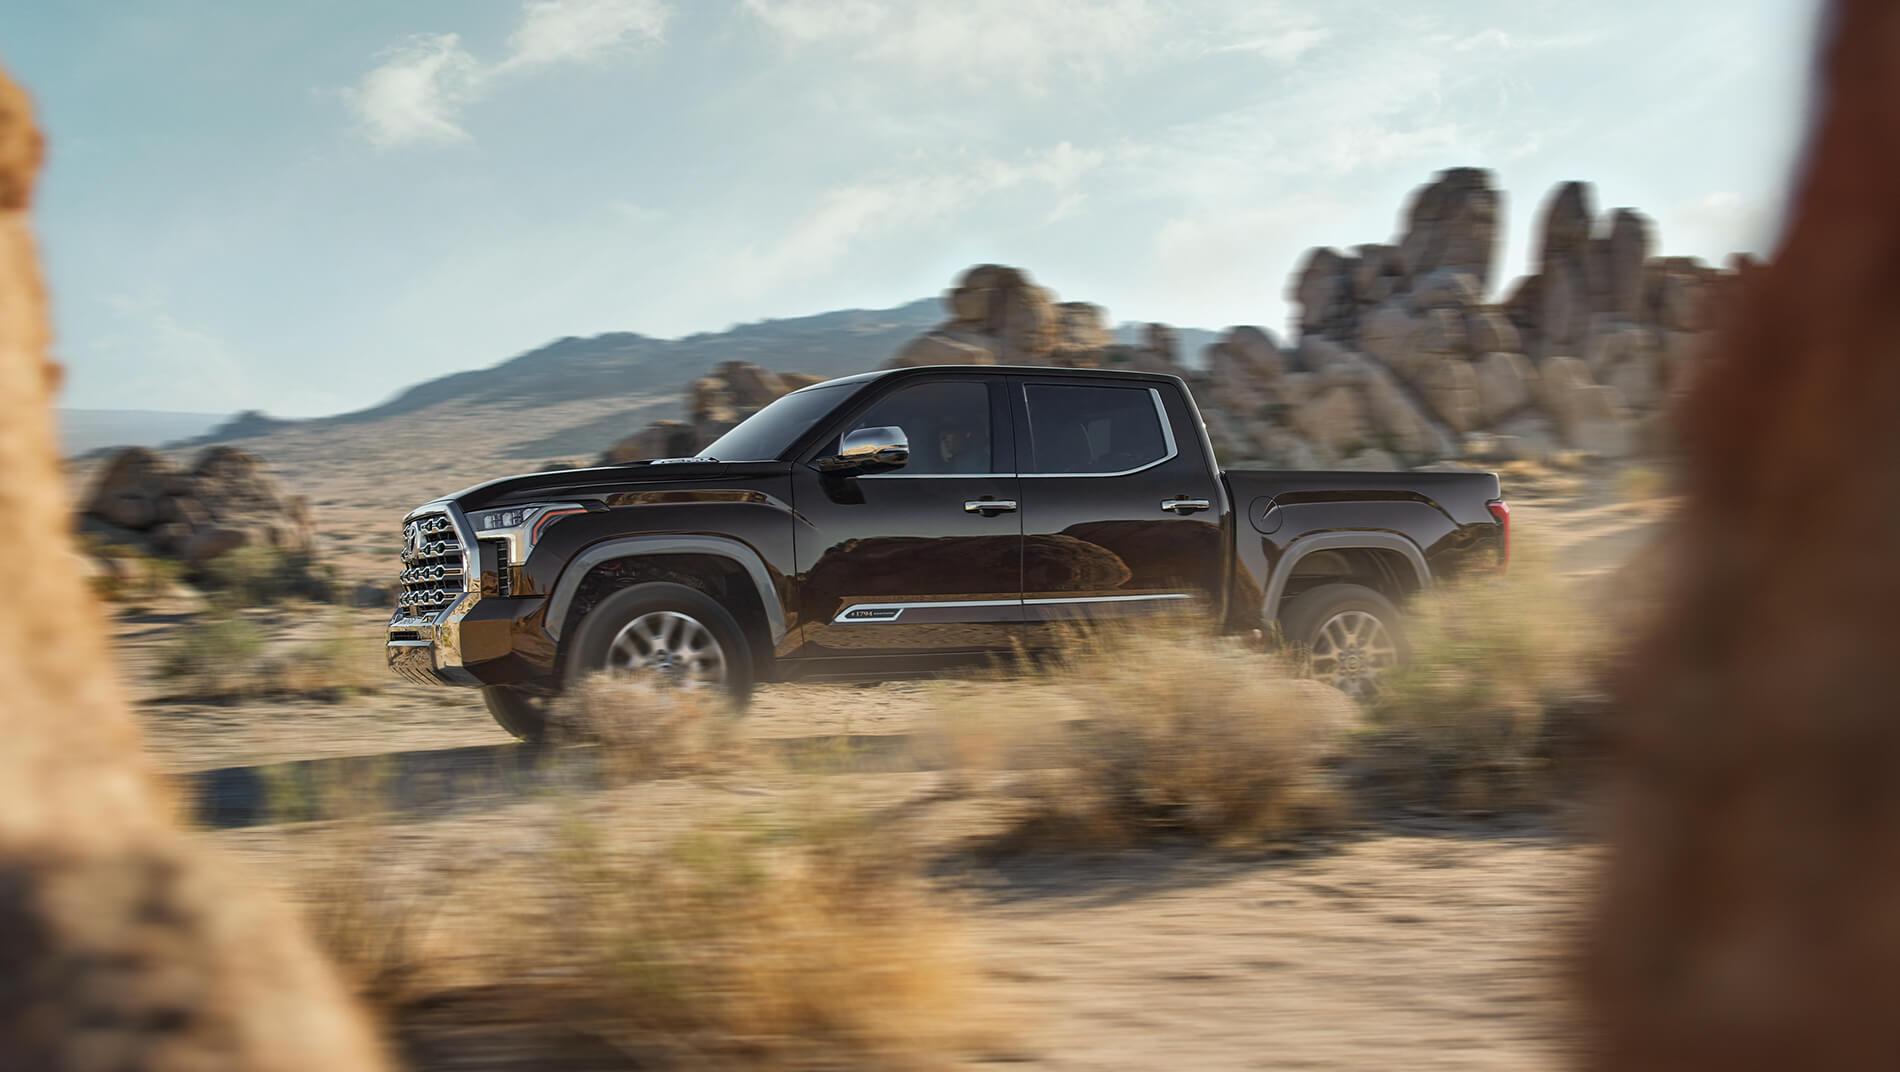 Black Toyota Tundra driving through rocky mountains